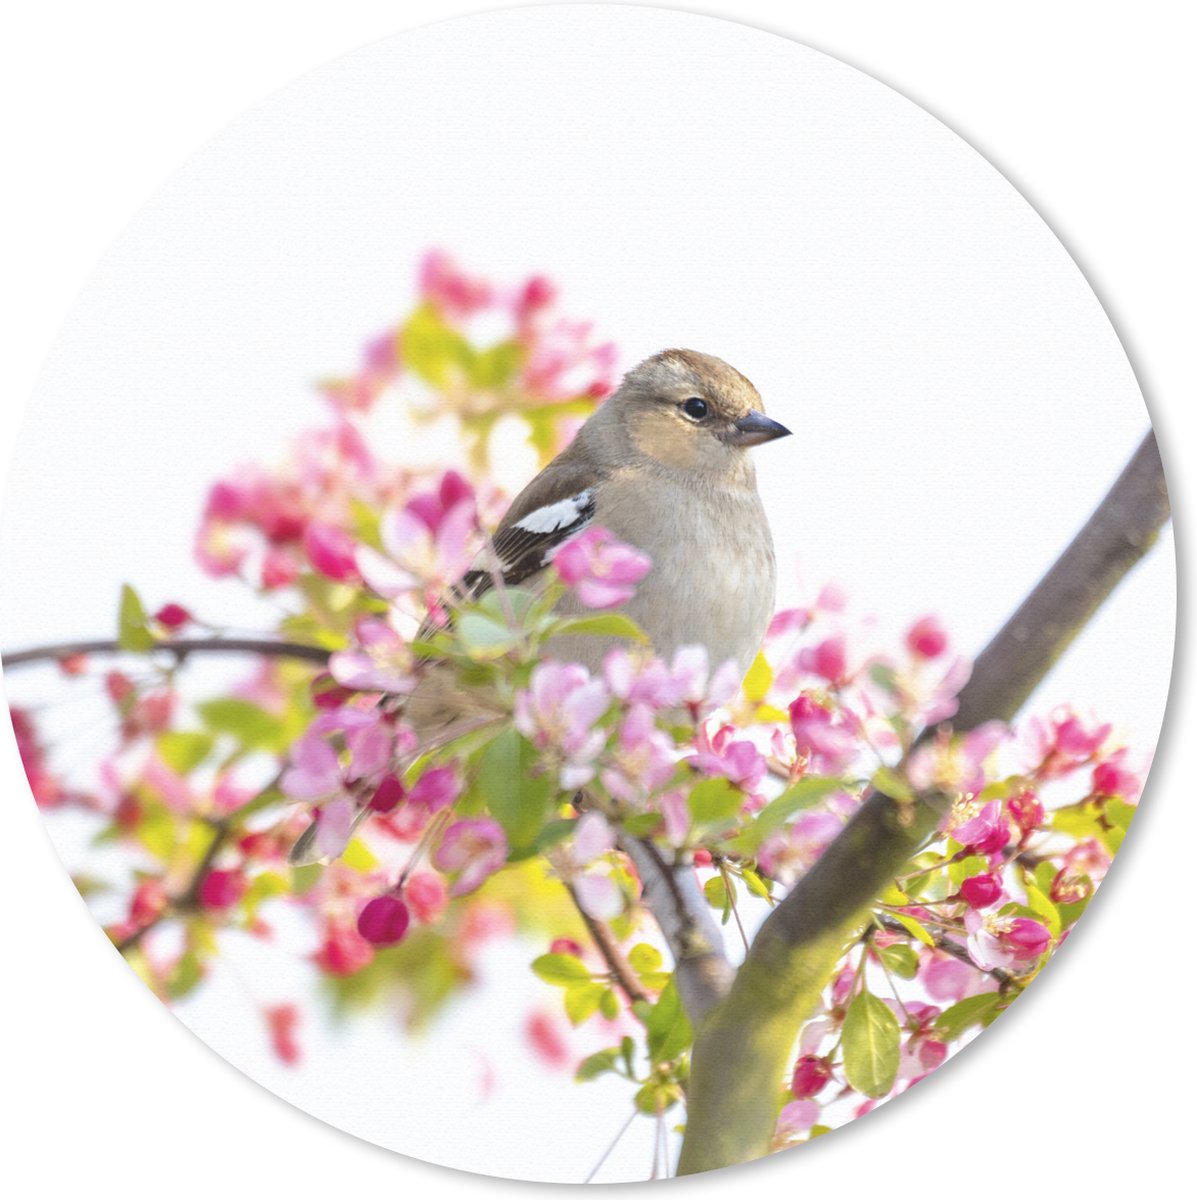 Muismat - Mousepad - Rond - Vogel tussen roze bloemen - 20x20 cm - Ronde muismat